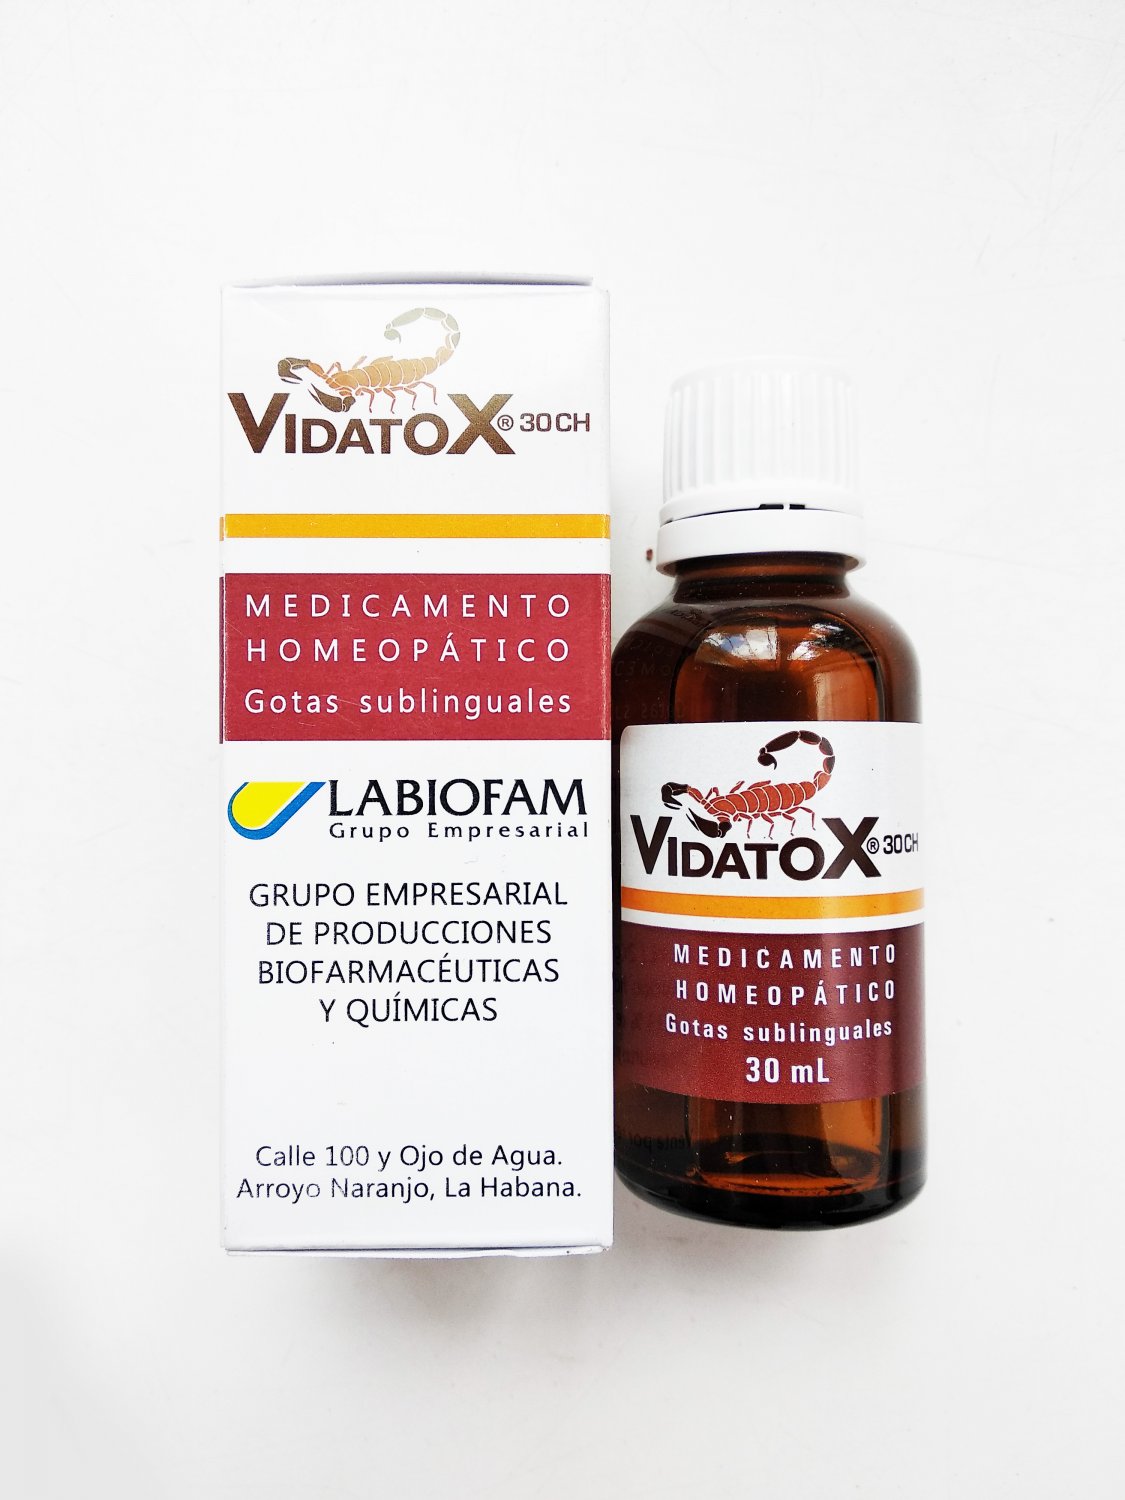 Vidatox Original Labiofam Vidatox [Brown] Natural Homeopathic Treatment 30CH blue scorpion venom